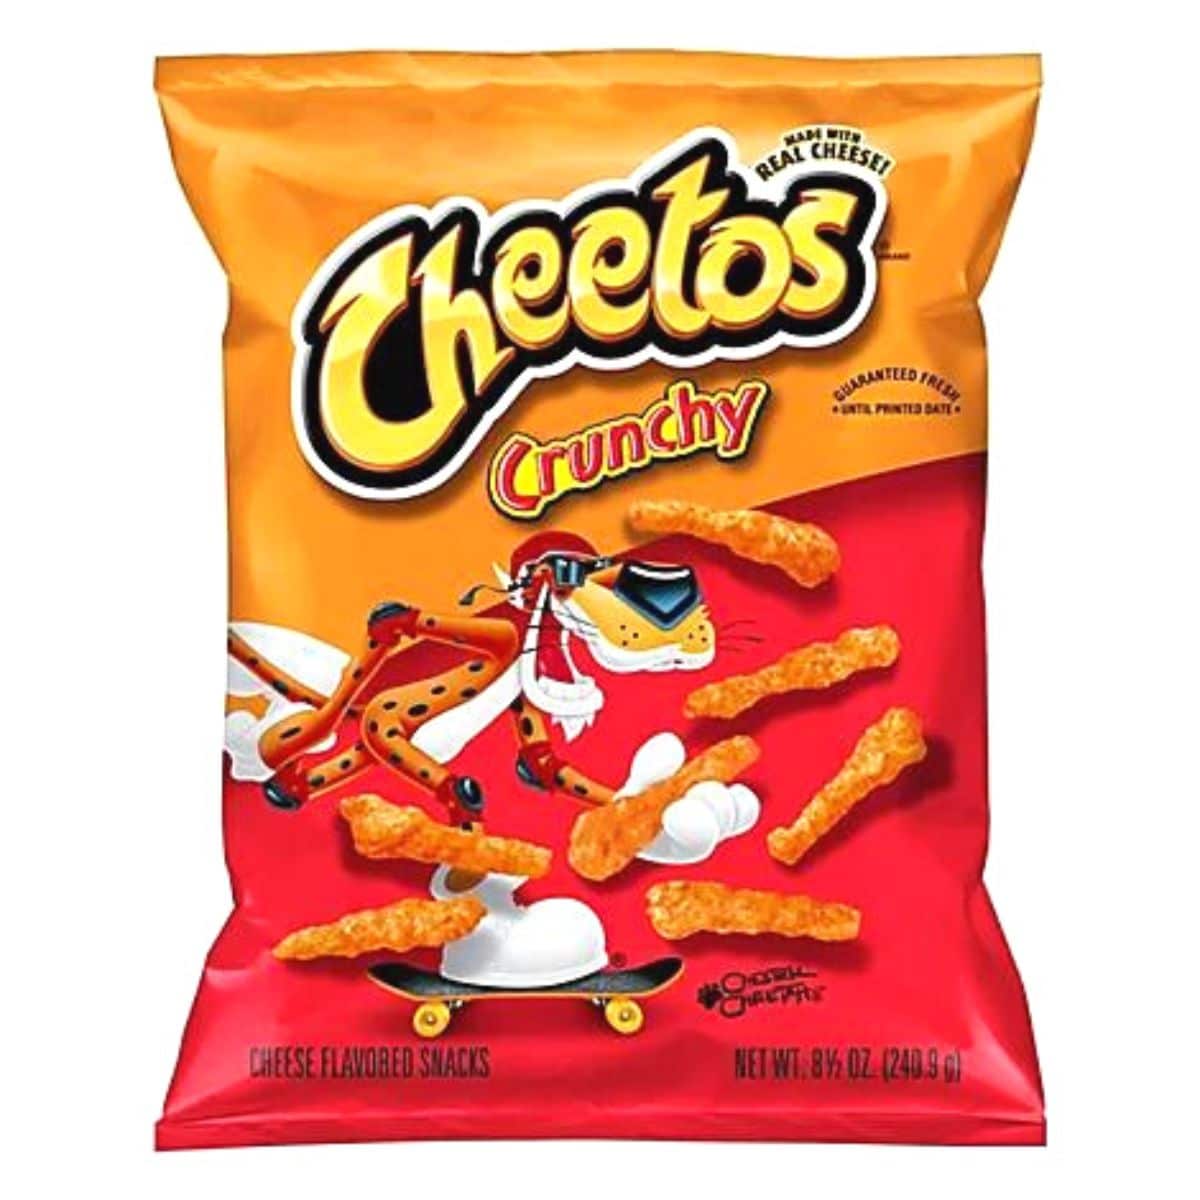 A bag of crunchy Cheetos.